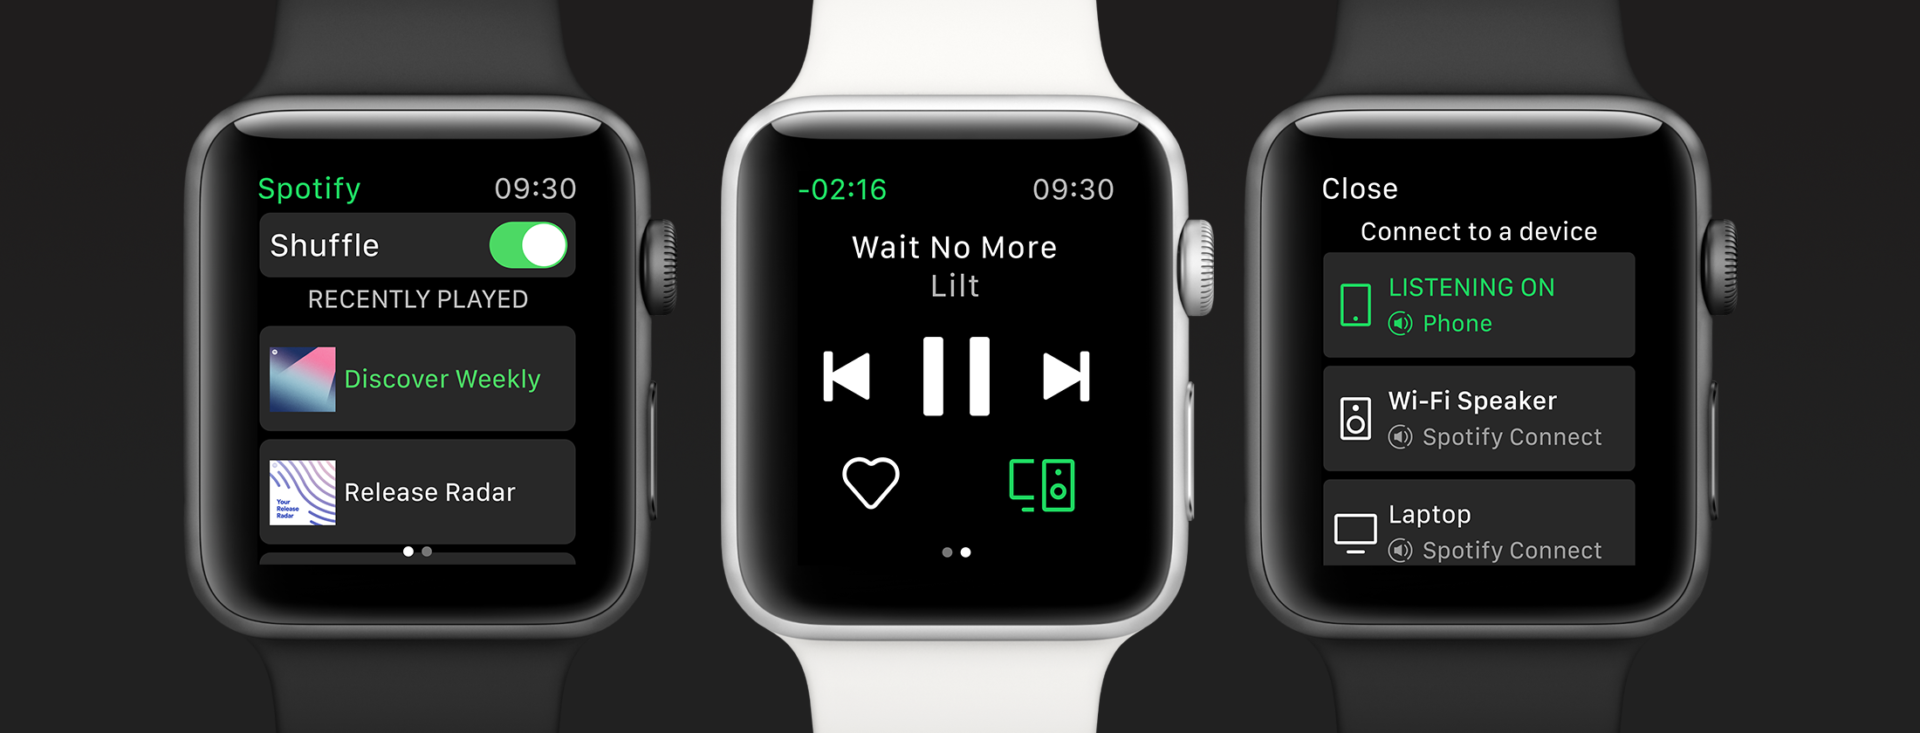 Download Music Spotify Apple Watch